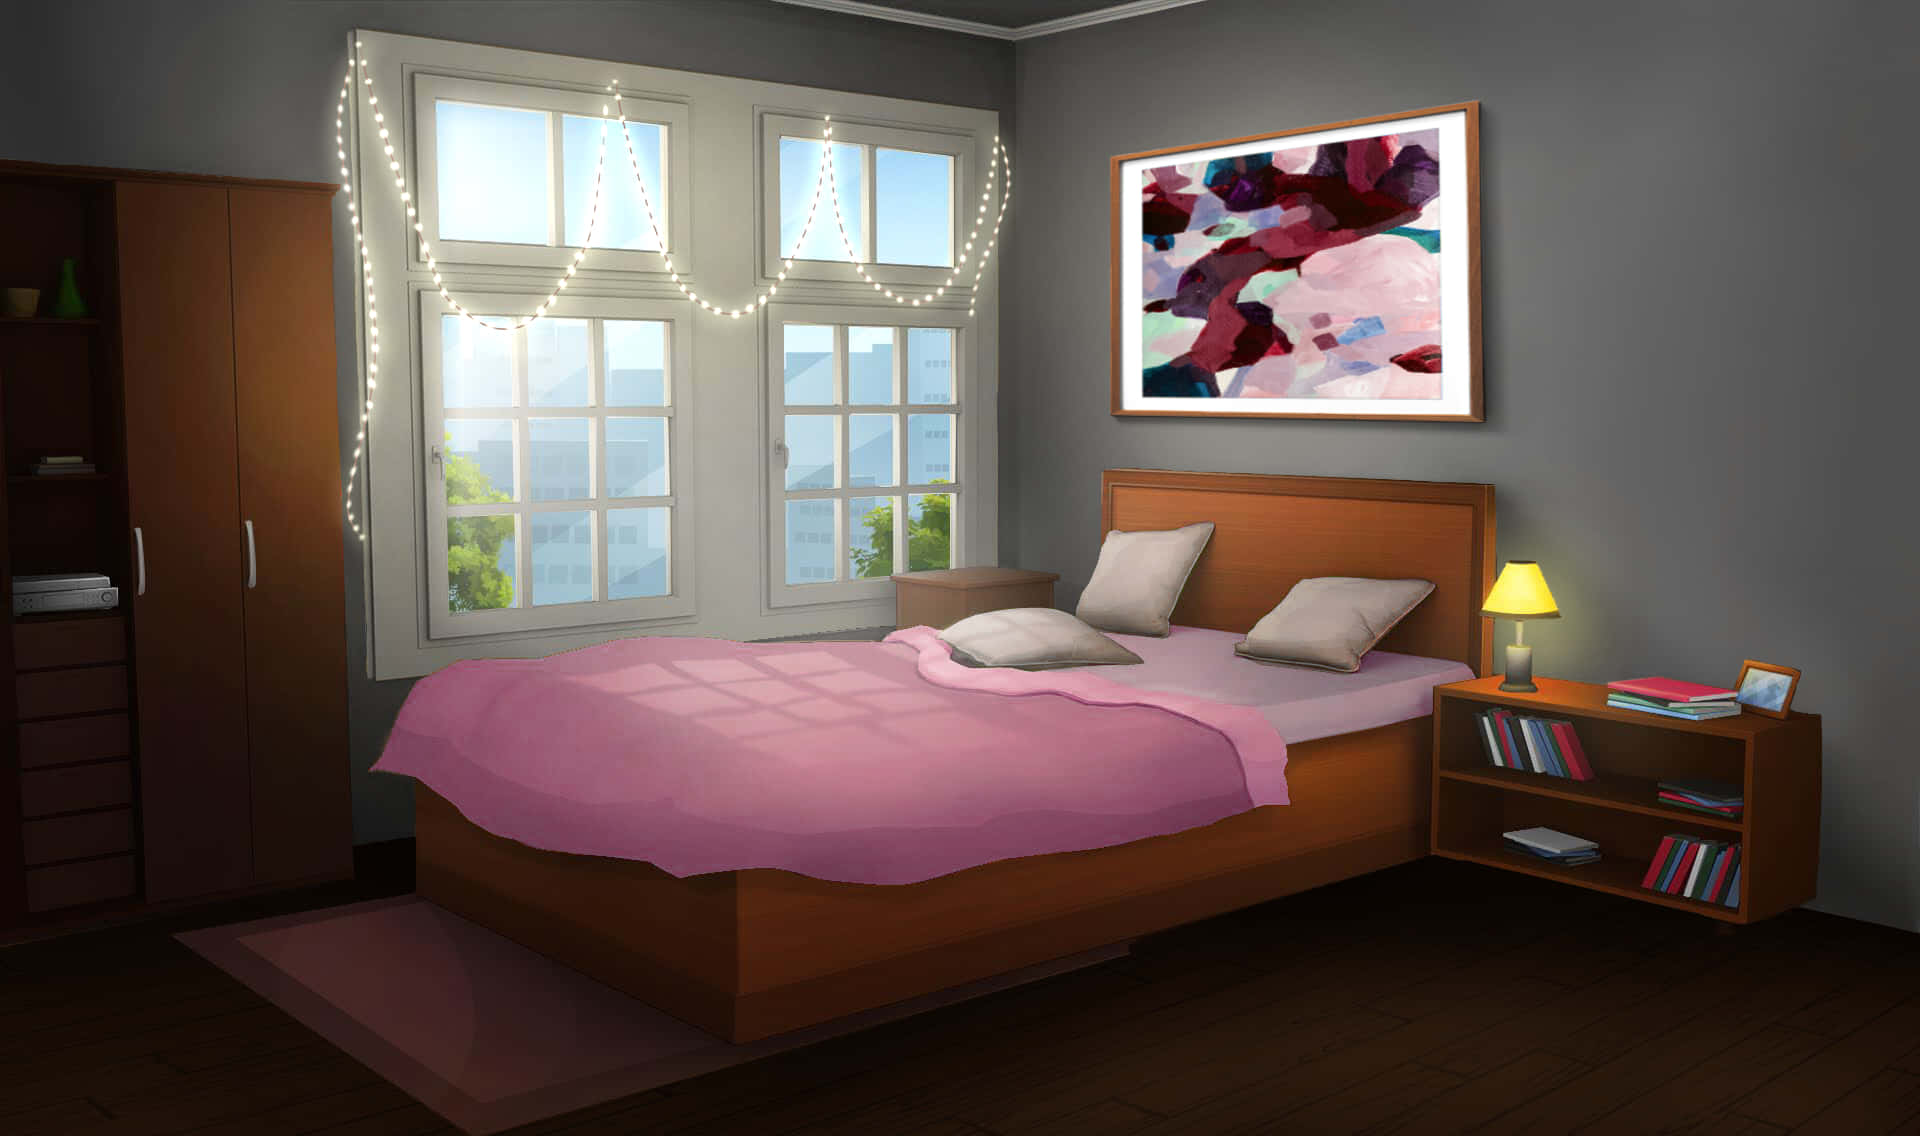 Enjoy Your Anime Adventure in this Cozy Bedroom